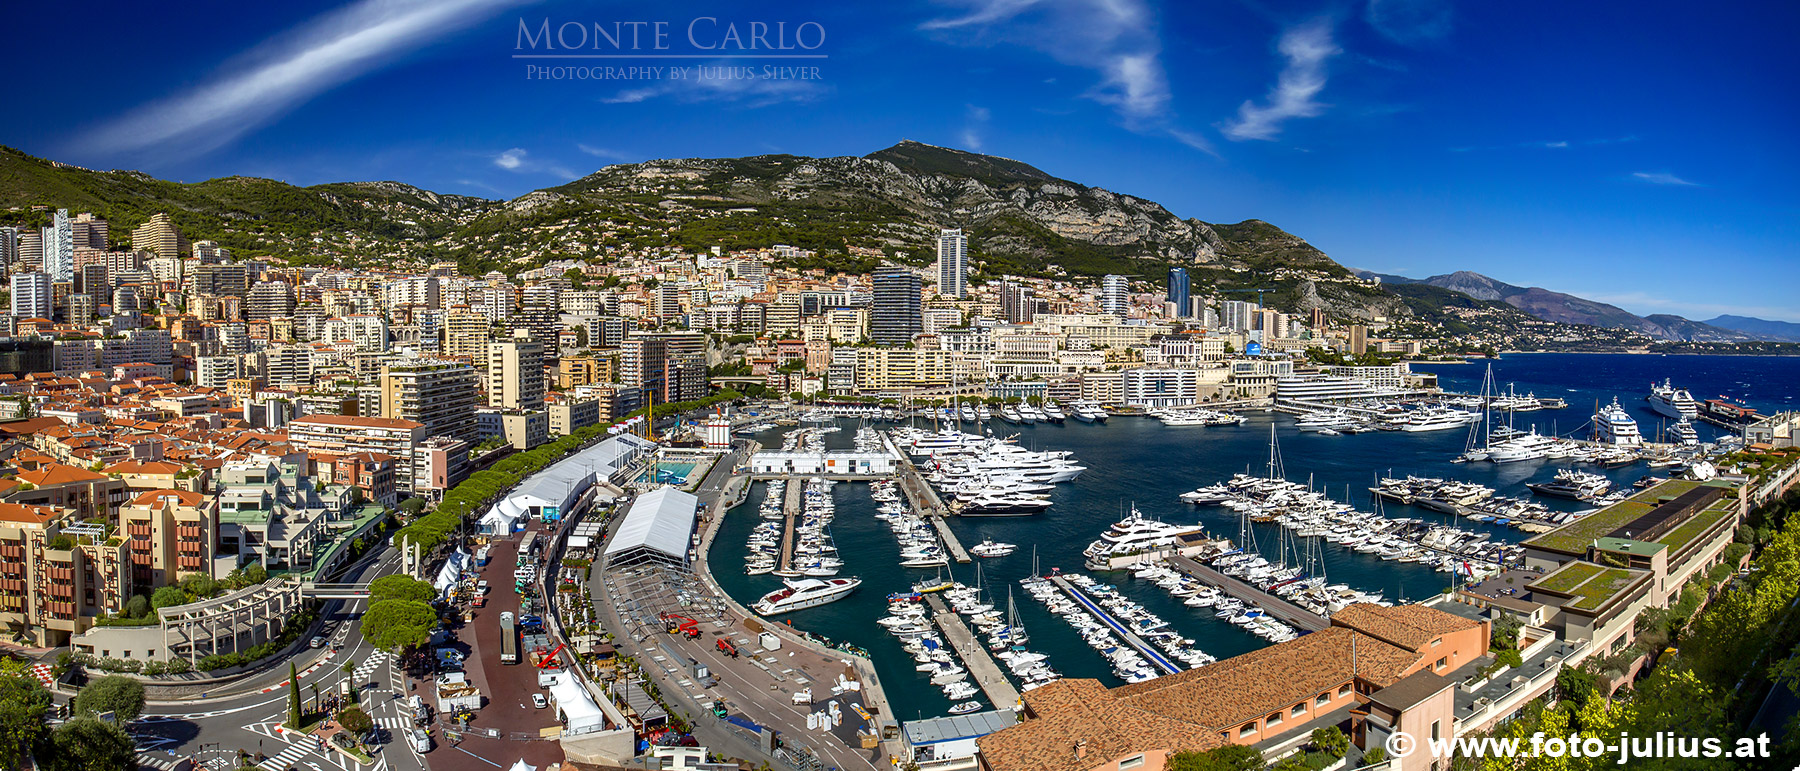 Monte_Carlo_007a.jpg, 745kB